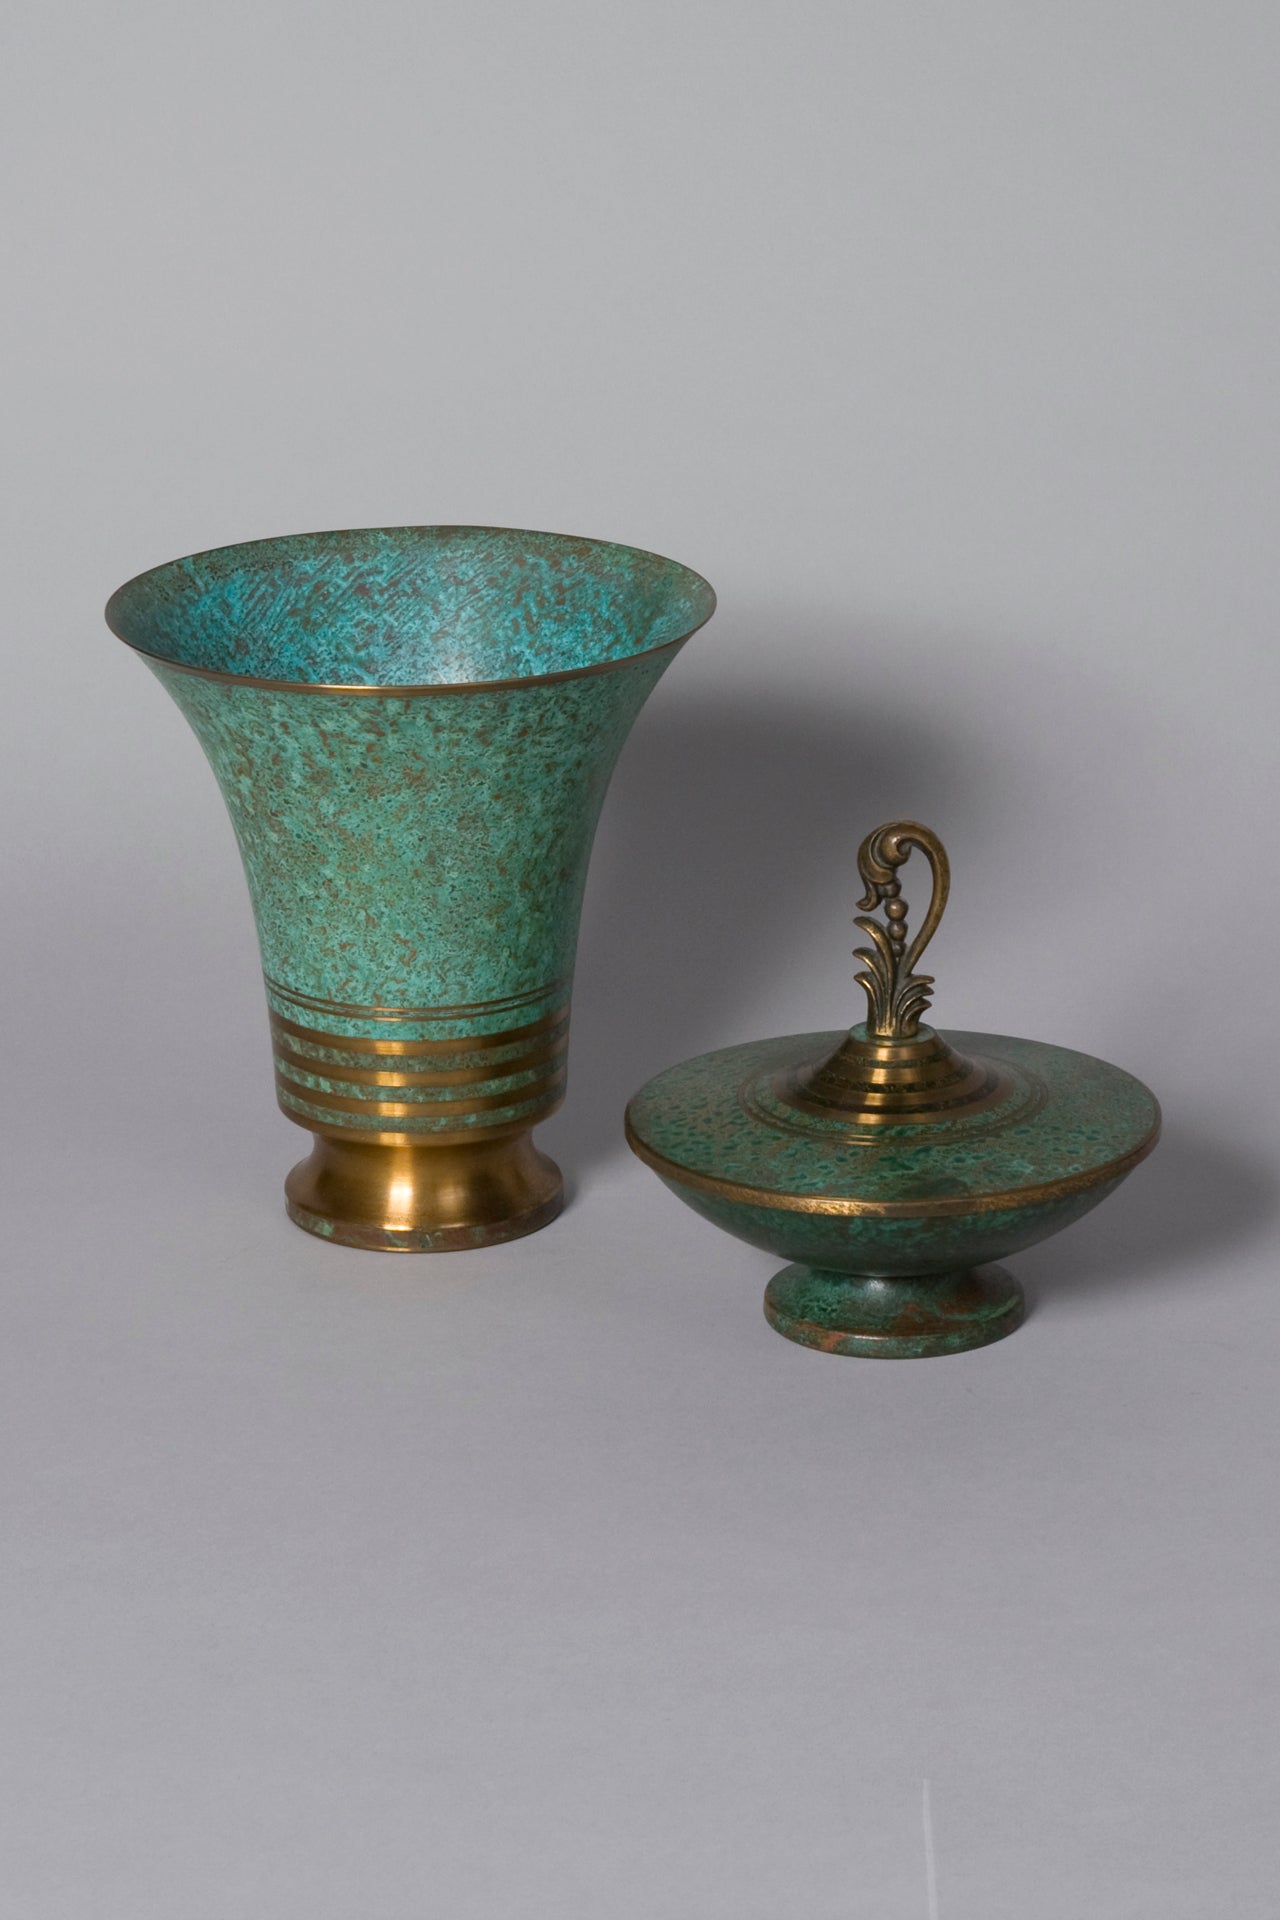 Two Verdigris Bronze Objects by Carl Sorensen